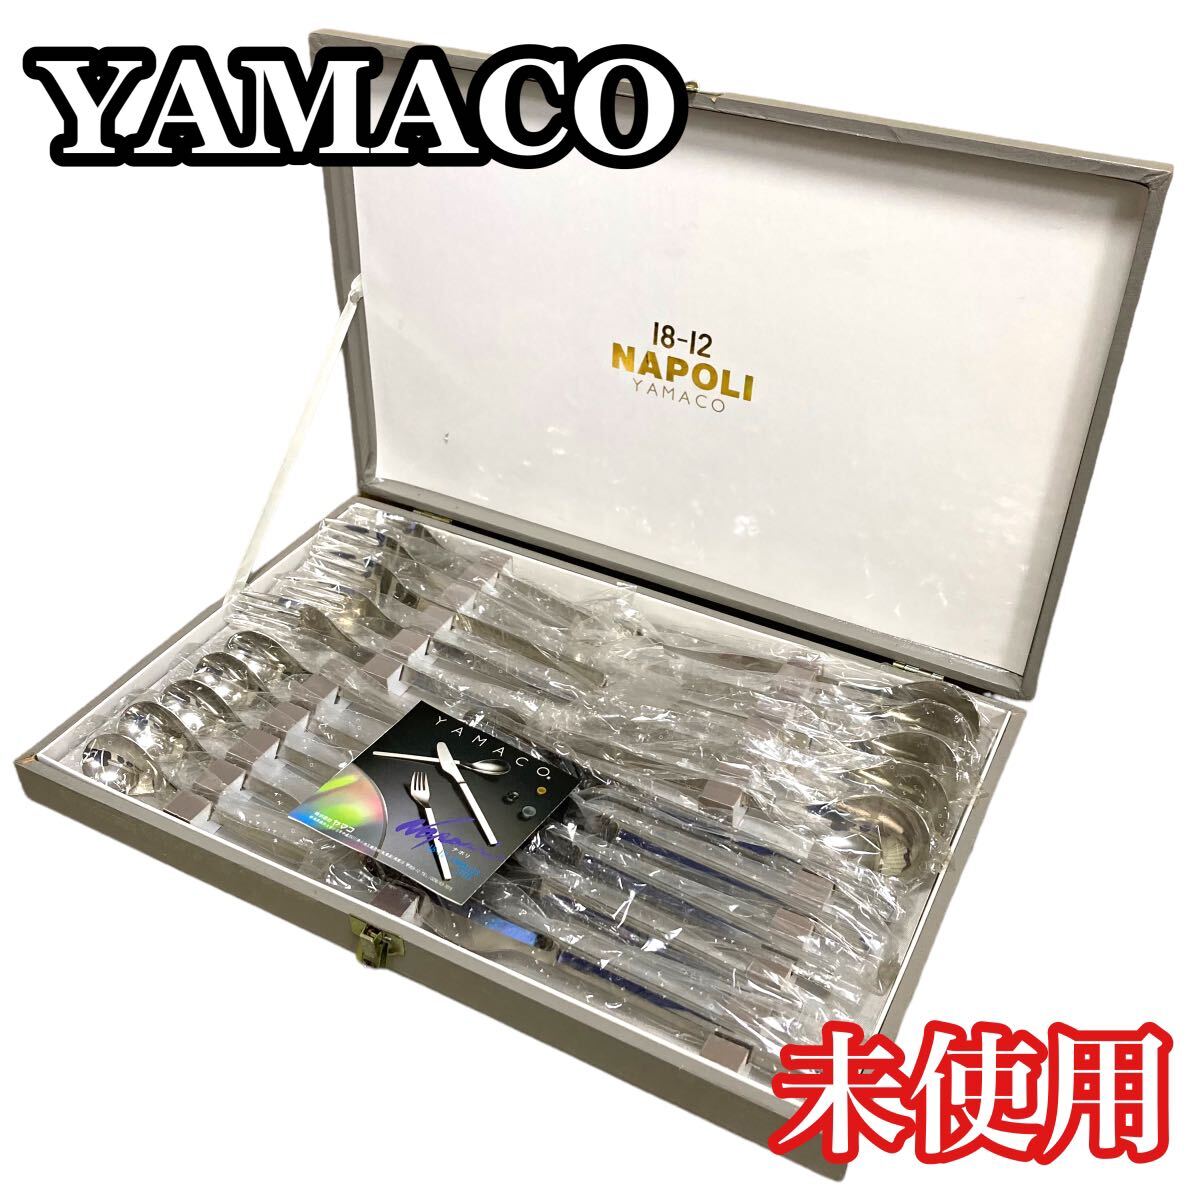 YAMACO 18-12 カトラリー セット ナポリ 山崎金属工業 未使用 スプーン ステンレス フォーク ナイフ_画像1